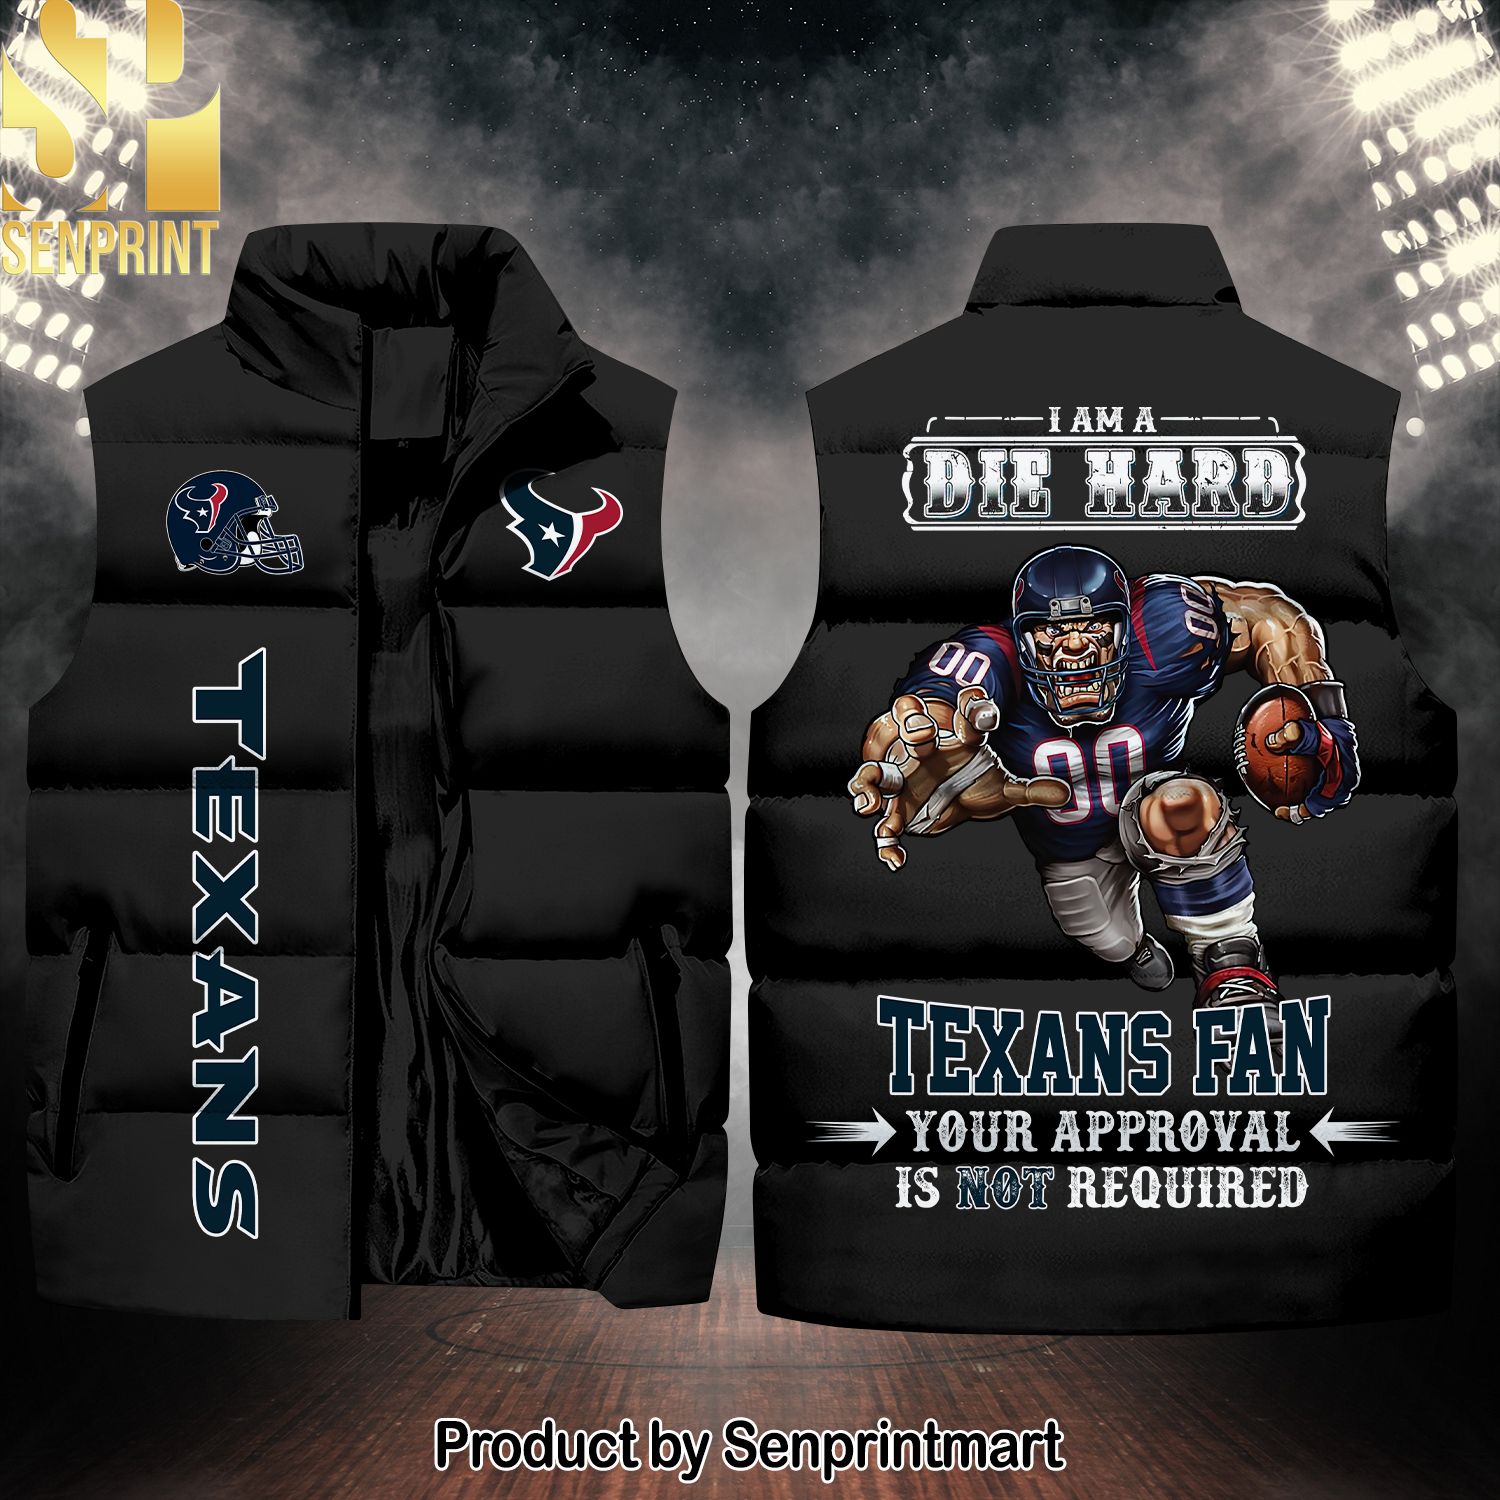 National Football League Houston Texans Die Hard Fan New Outfit Sleeveless Jacket